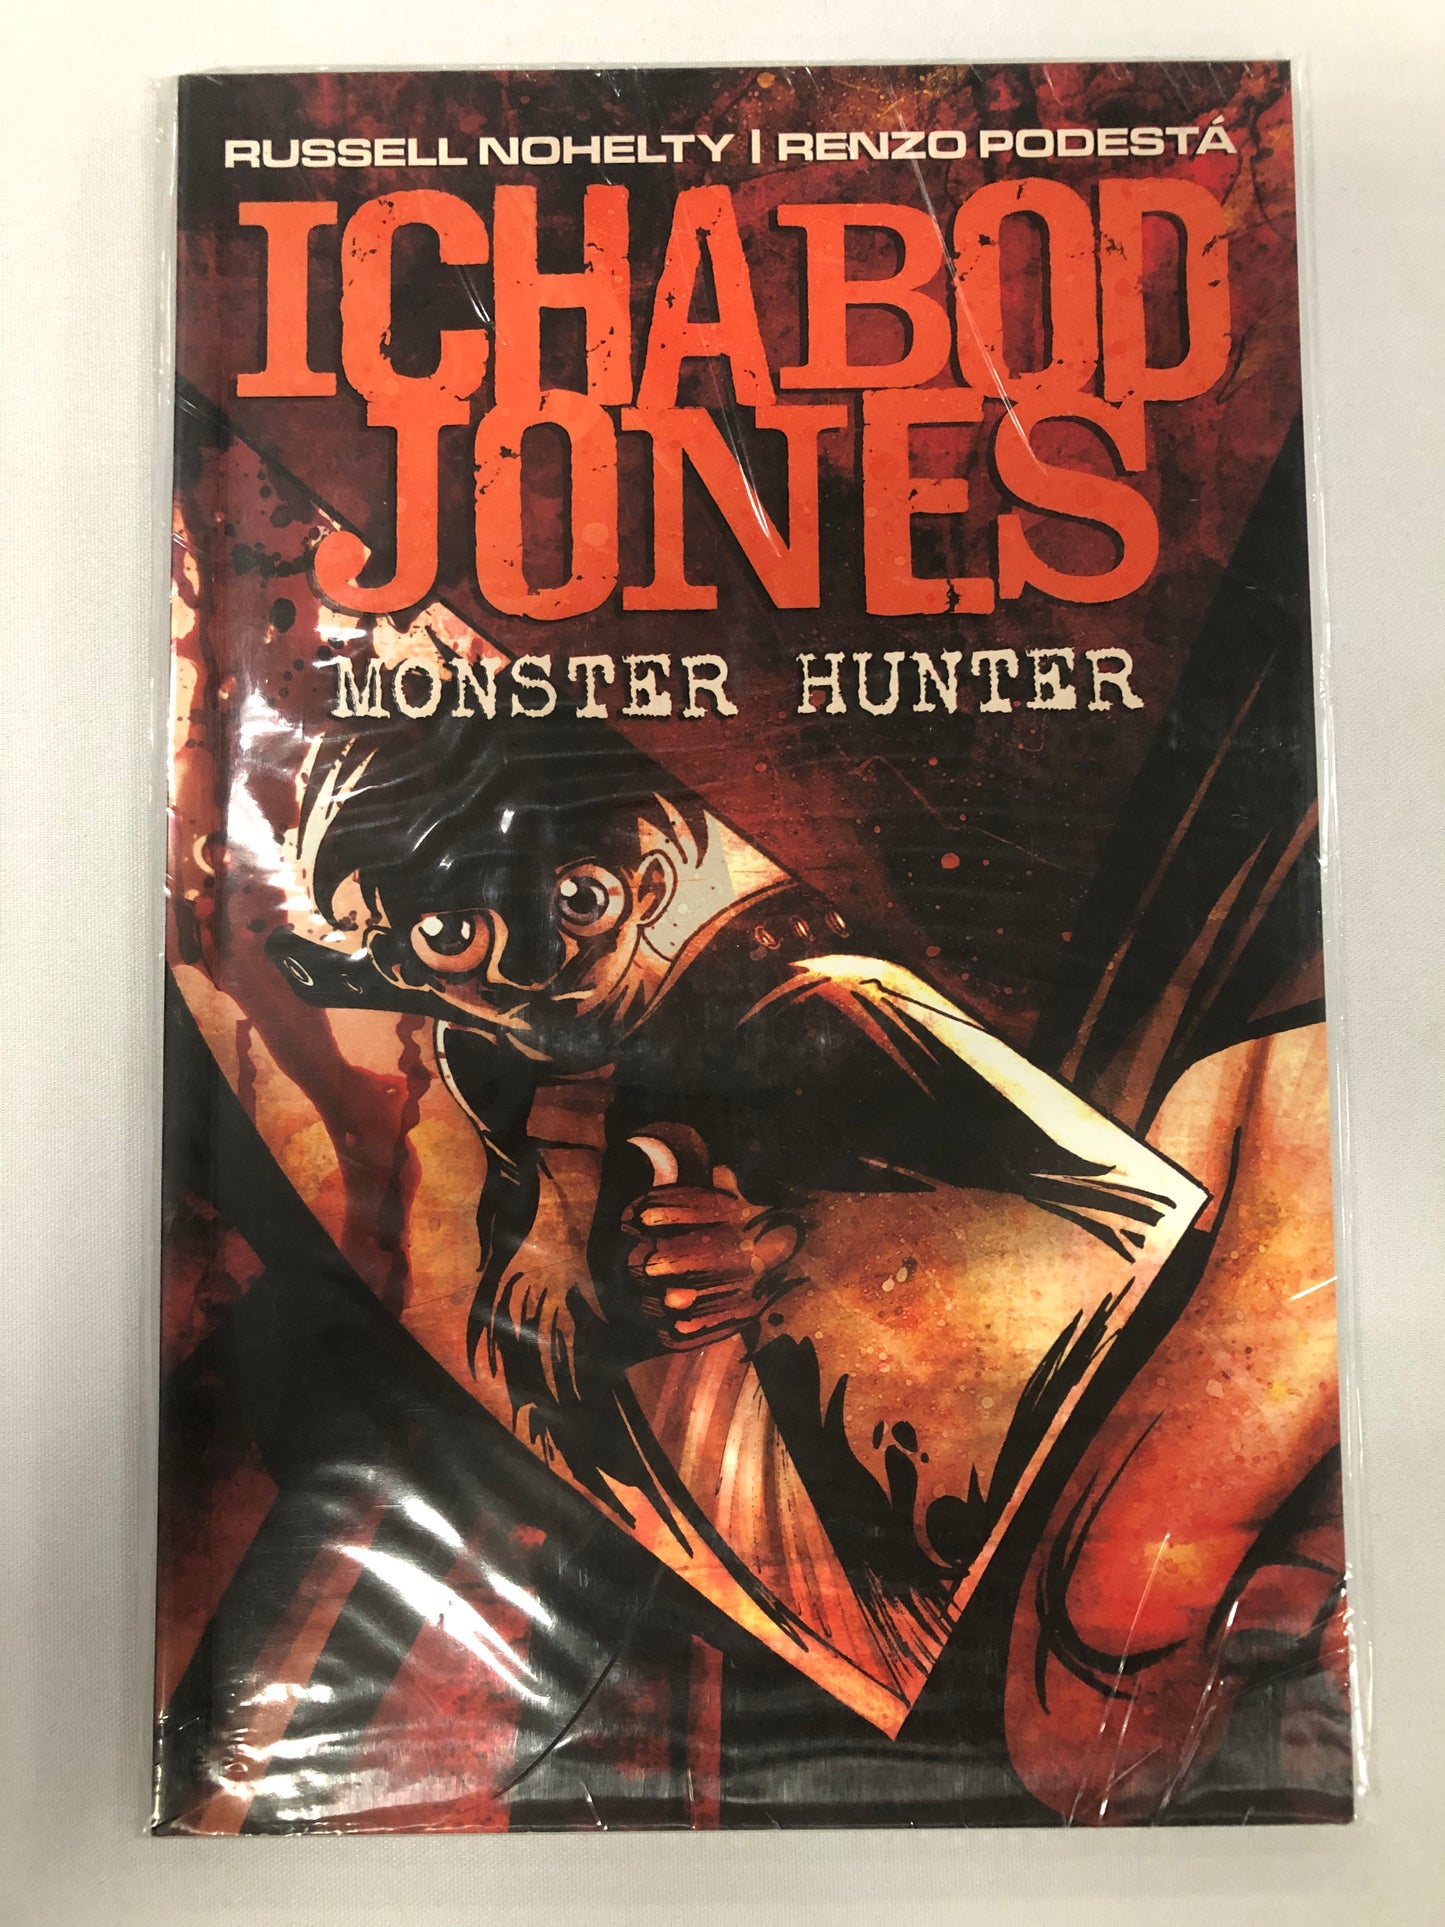 Ichabod Jones Monster Hunter: The Collector’s Edition